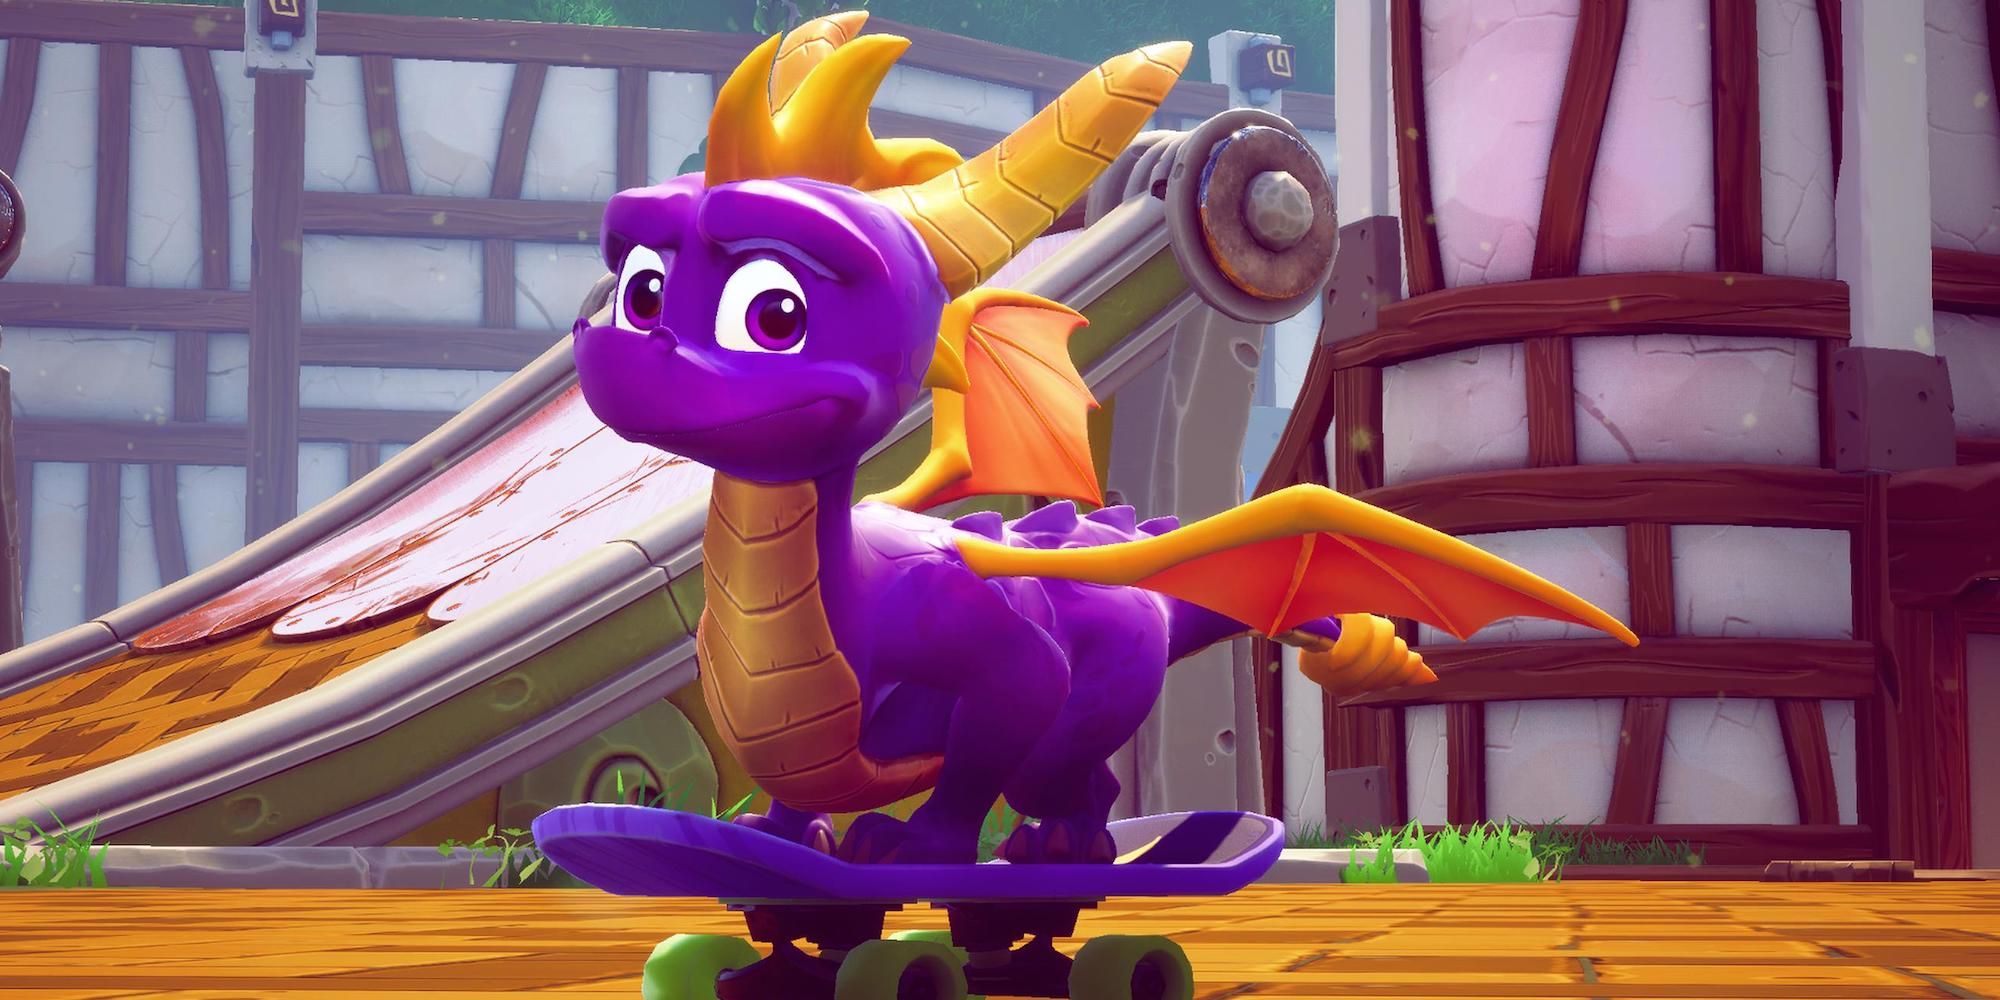 Spyro happily rides a purple skateboard.